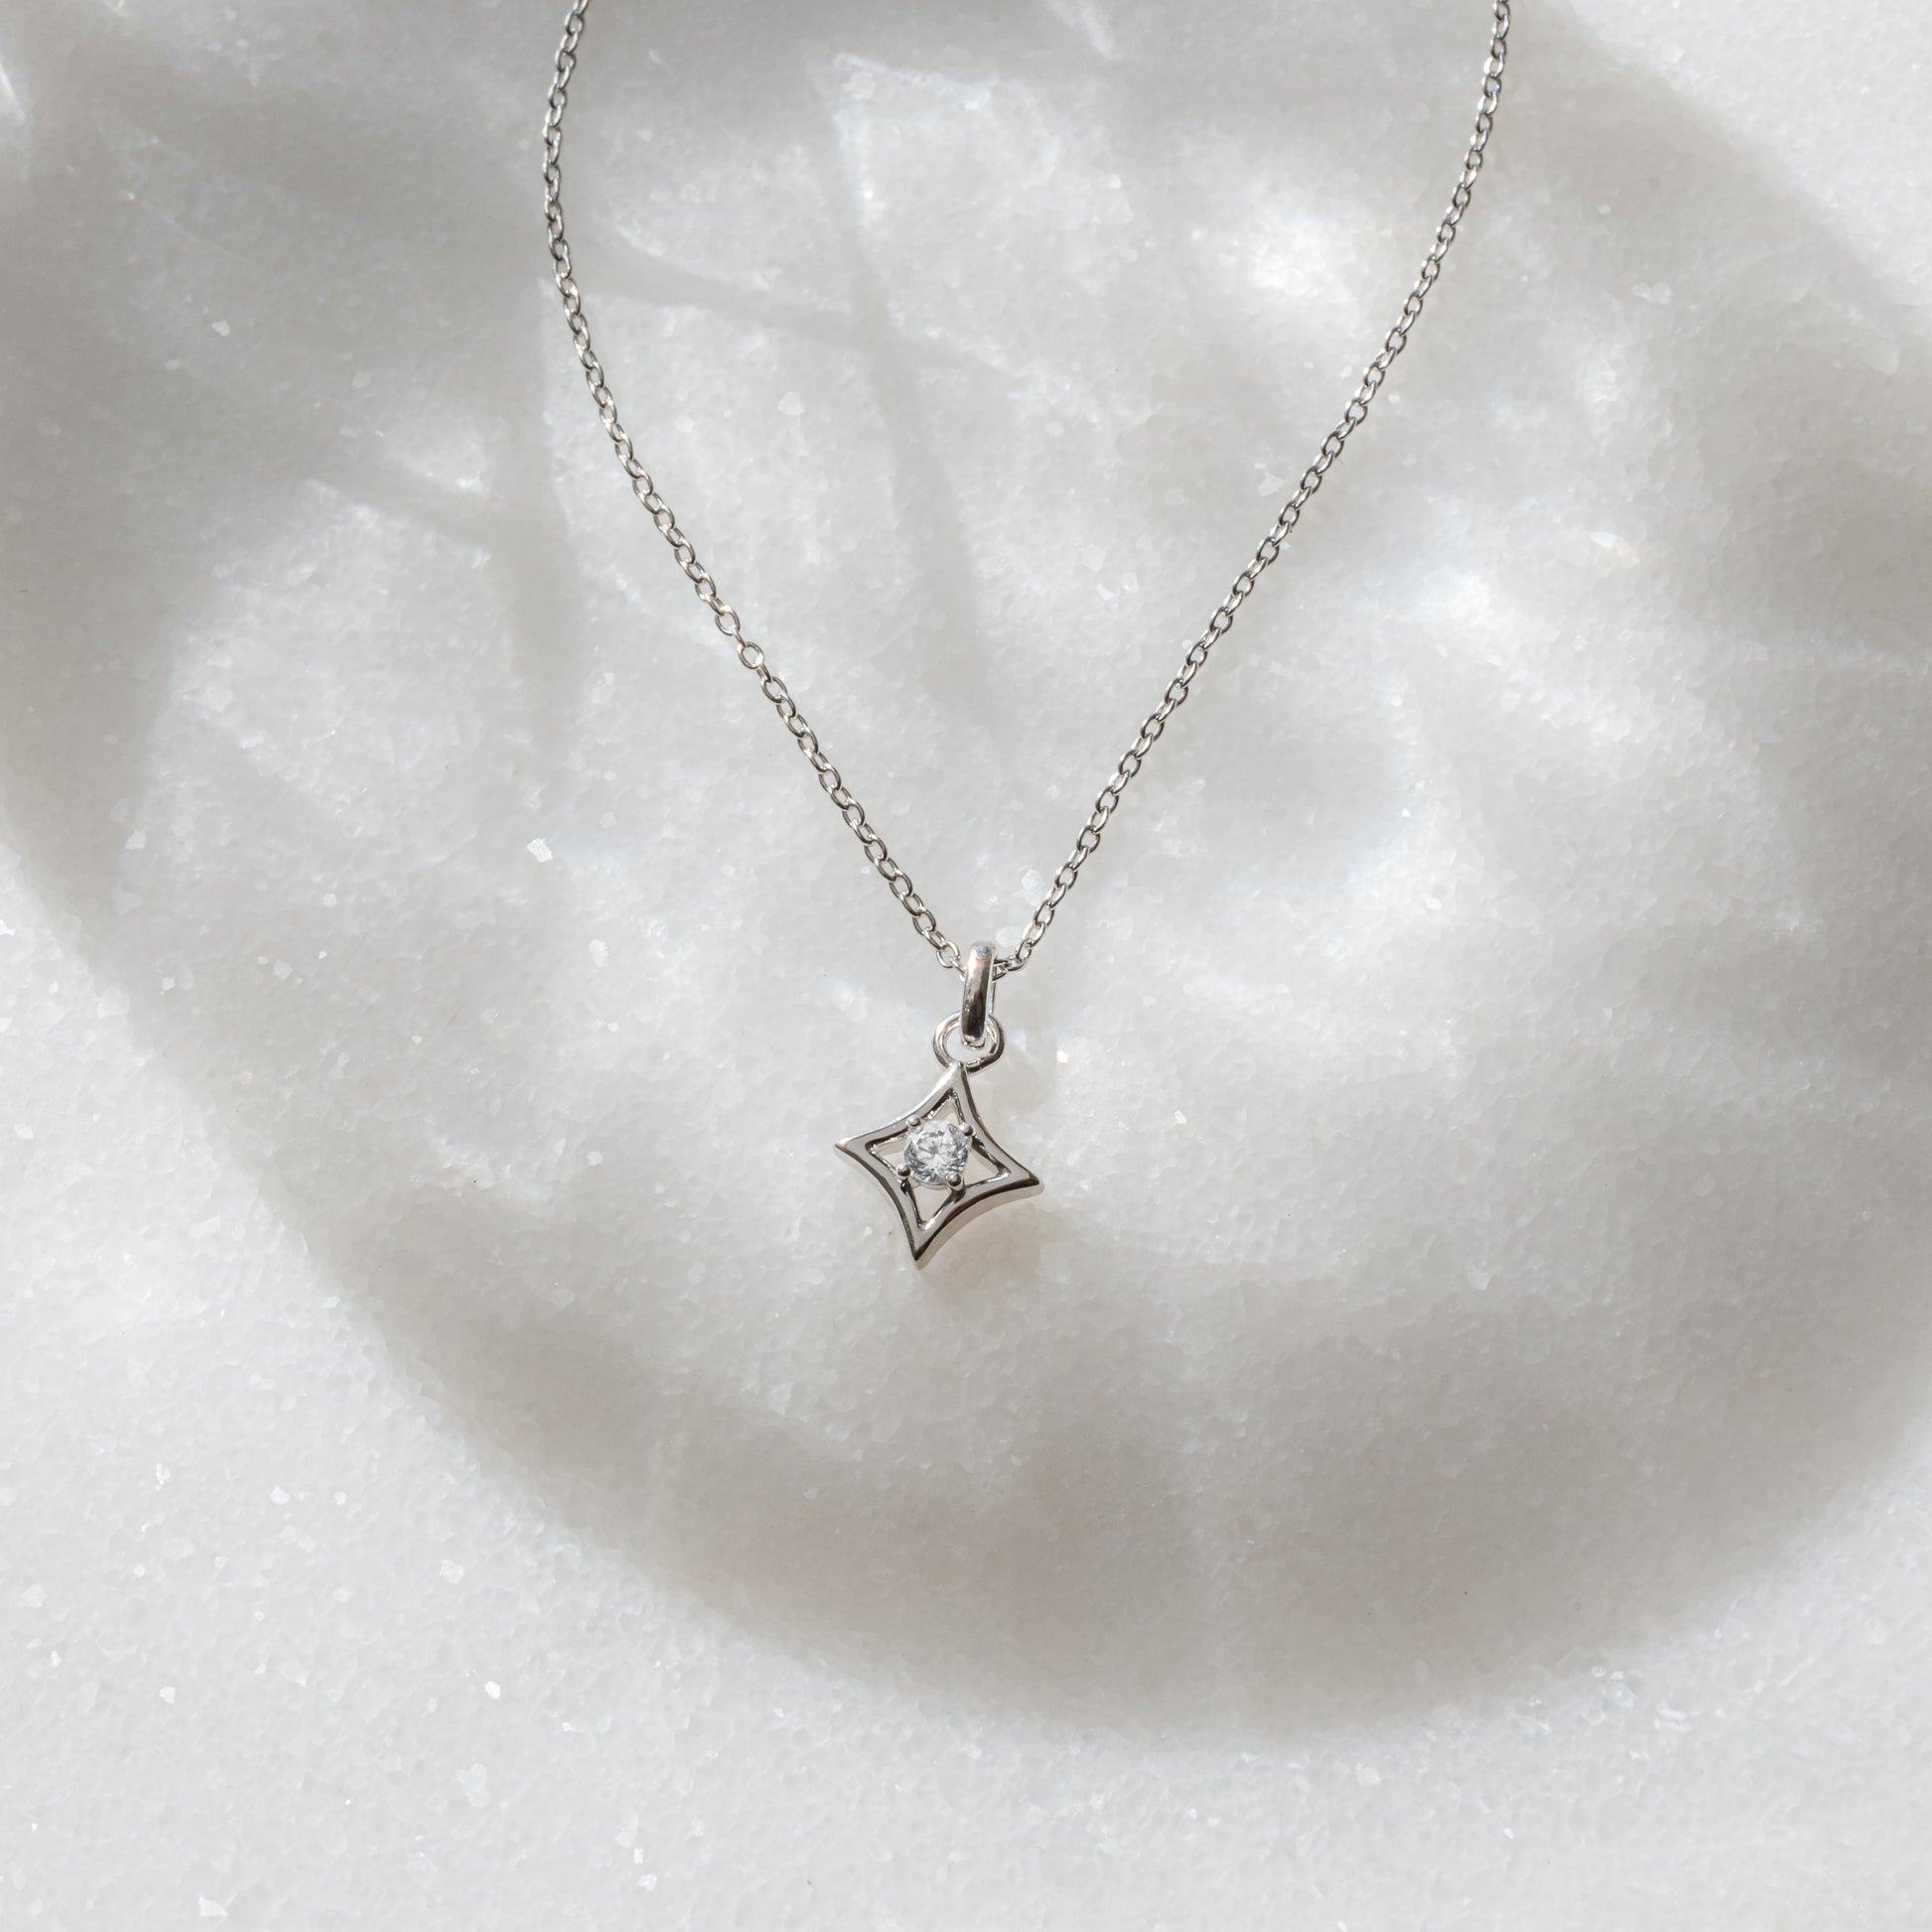 silver delicate layering pendant necklace